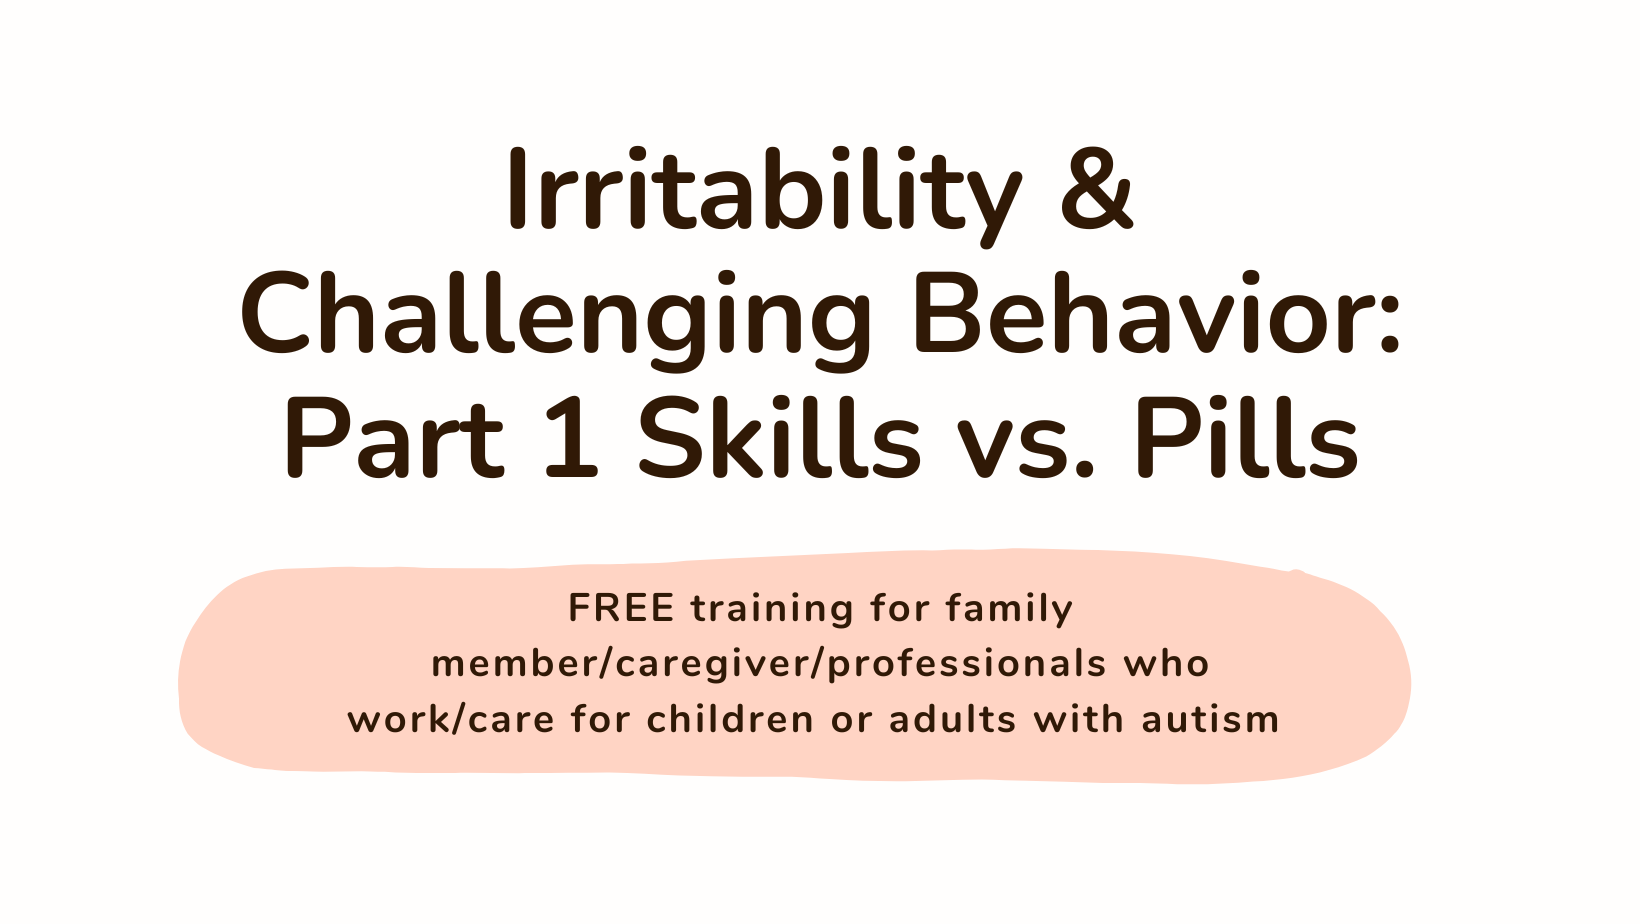 Irritability & Challenging Behavior Part 1 Skills vs Pills